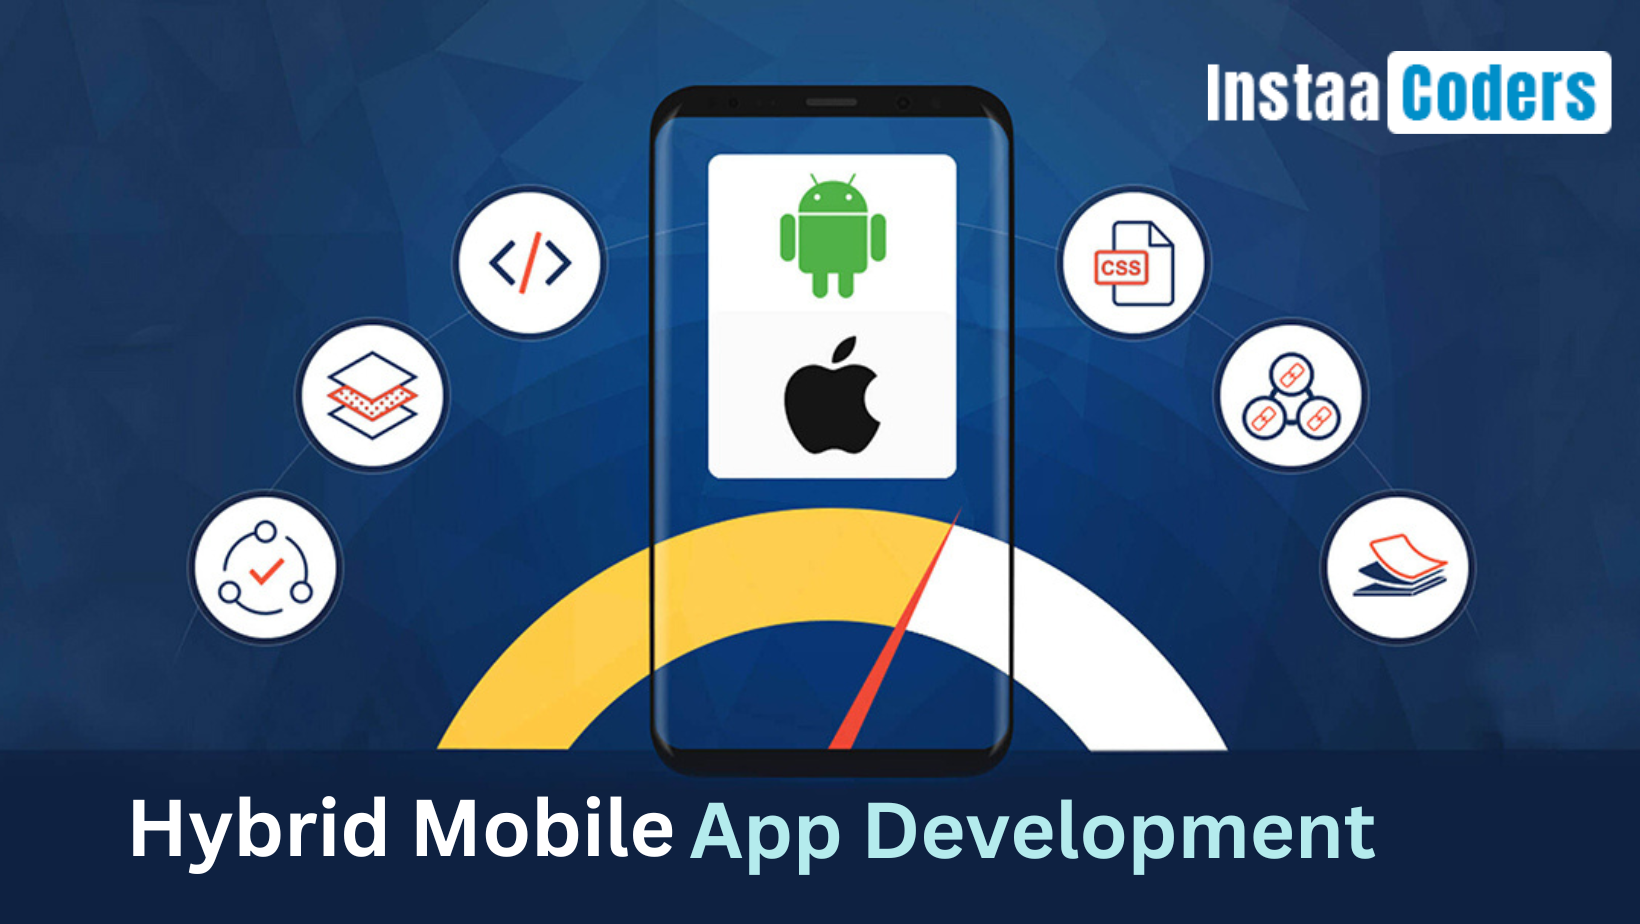 Hybrid App Development Services in Delhi